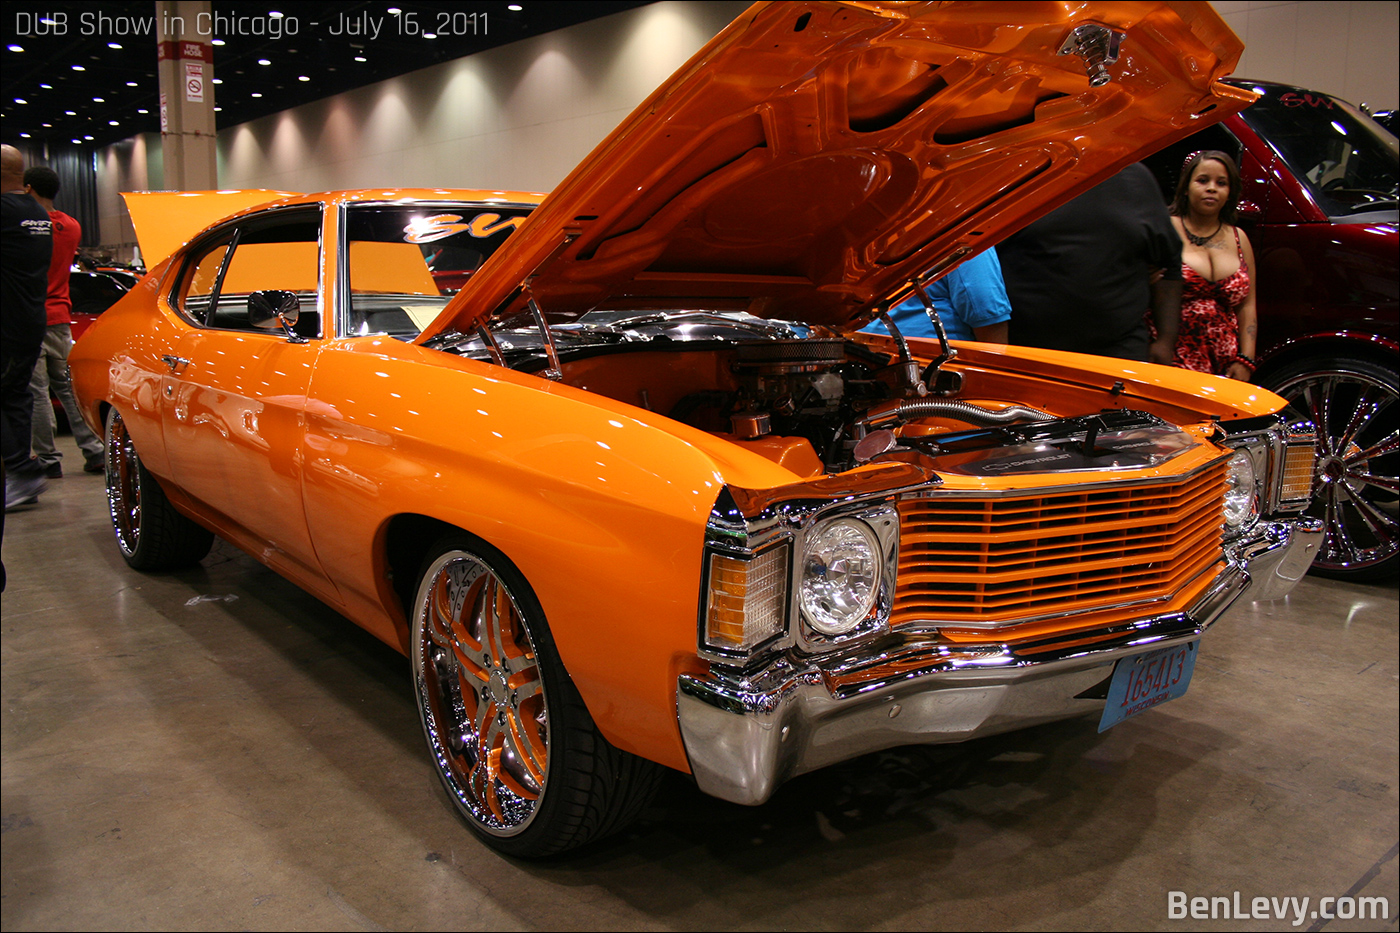 Orange Chevrolet Chevelle 2dr hardtop coupe